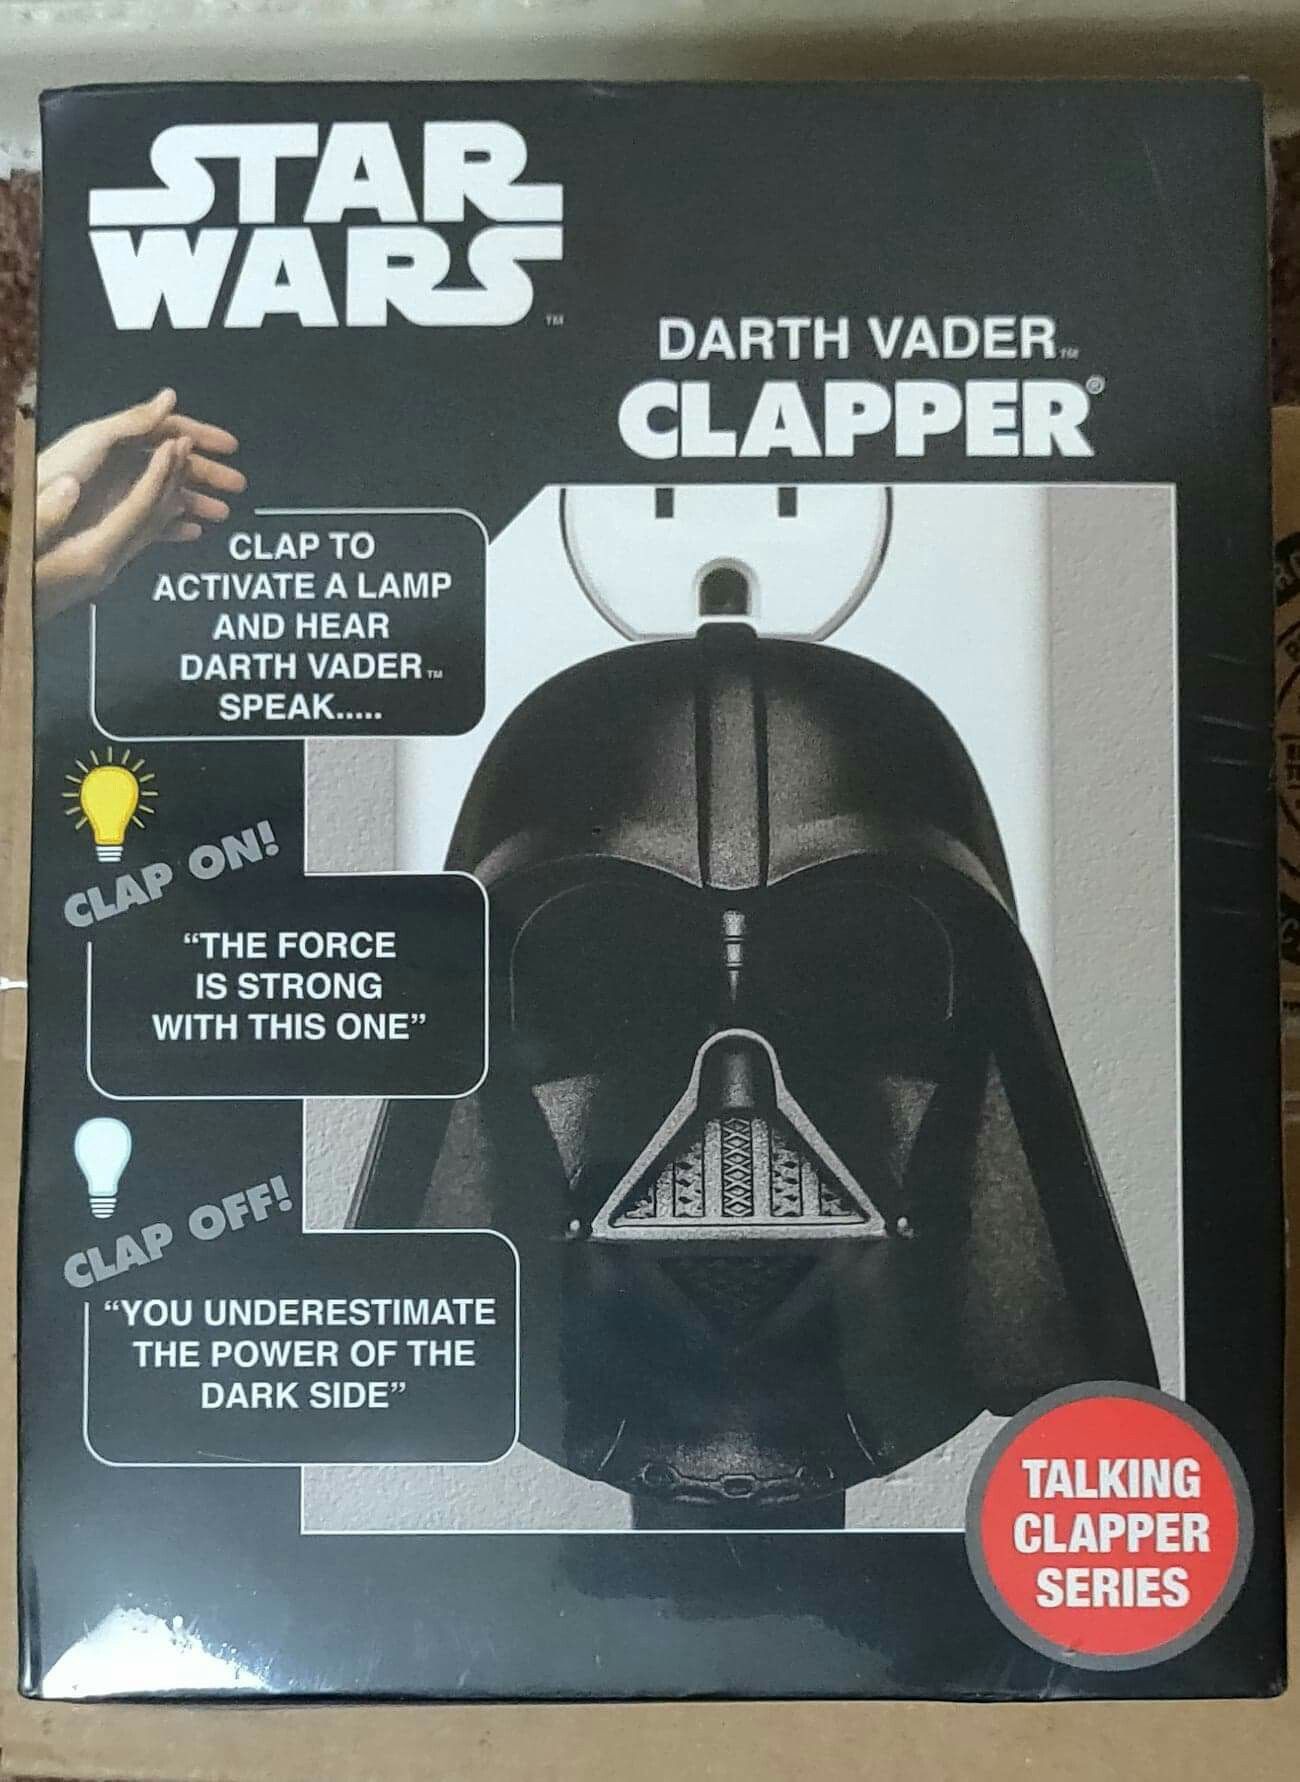 Star Wars DARTH VADER CLAPPER: Talking Clapper Series! (1 Outlet)